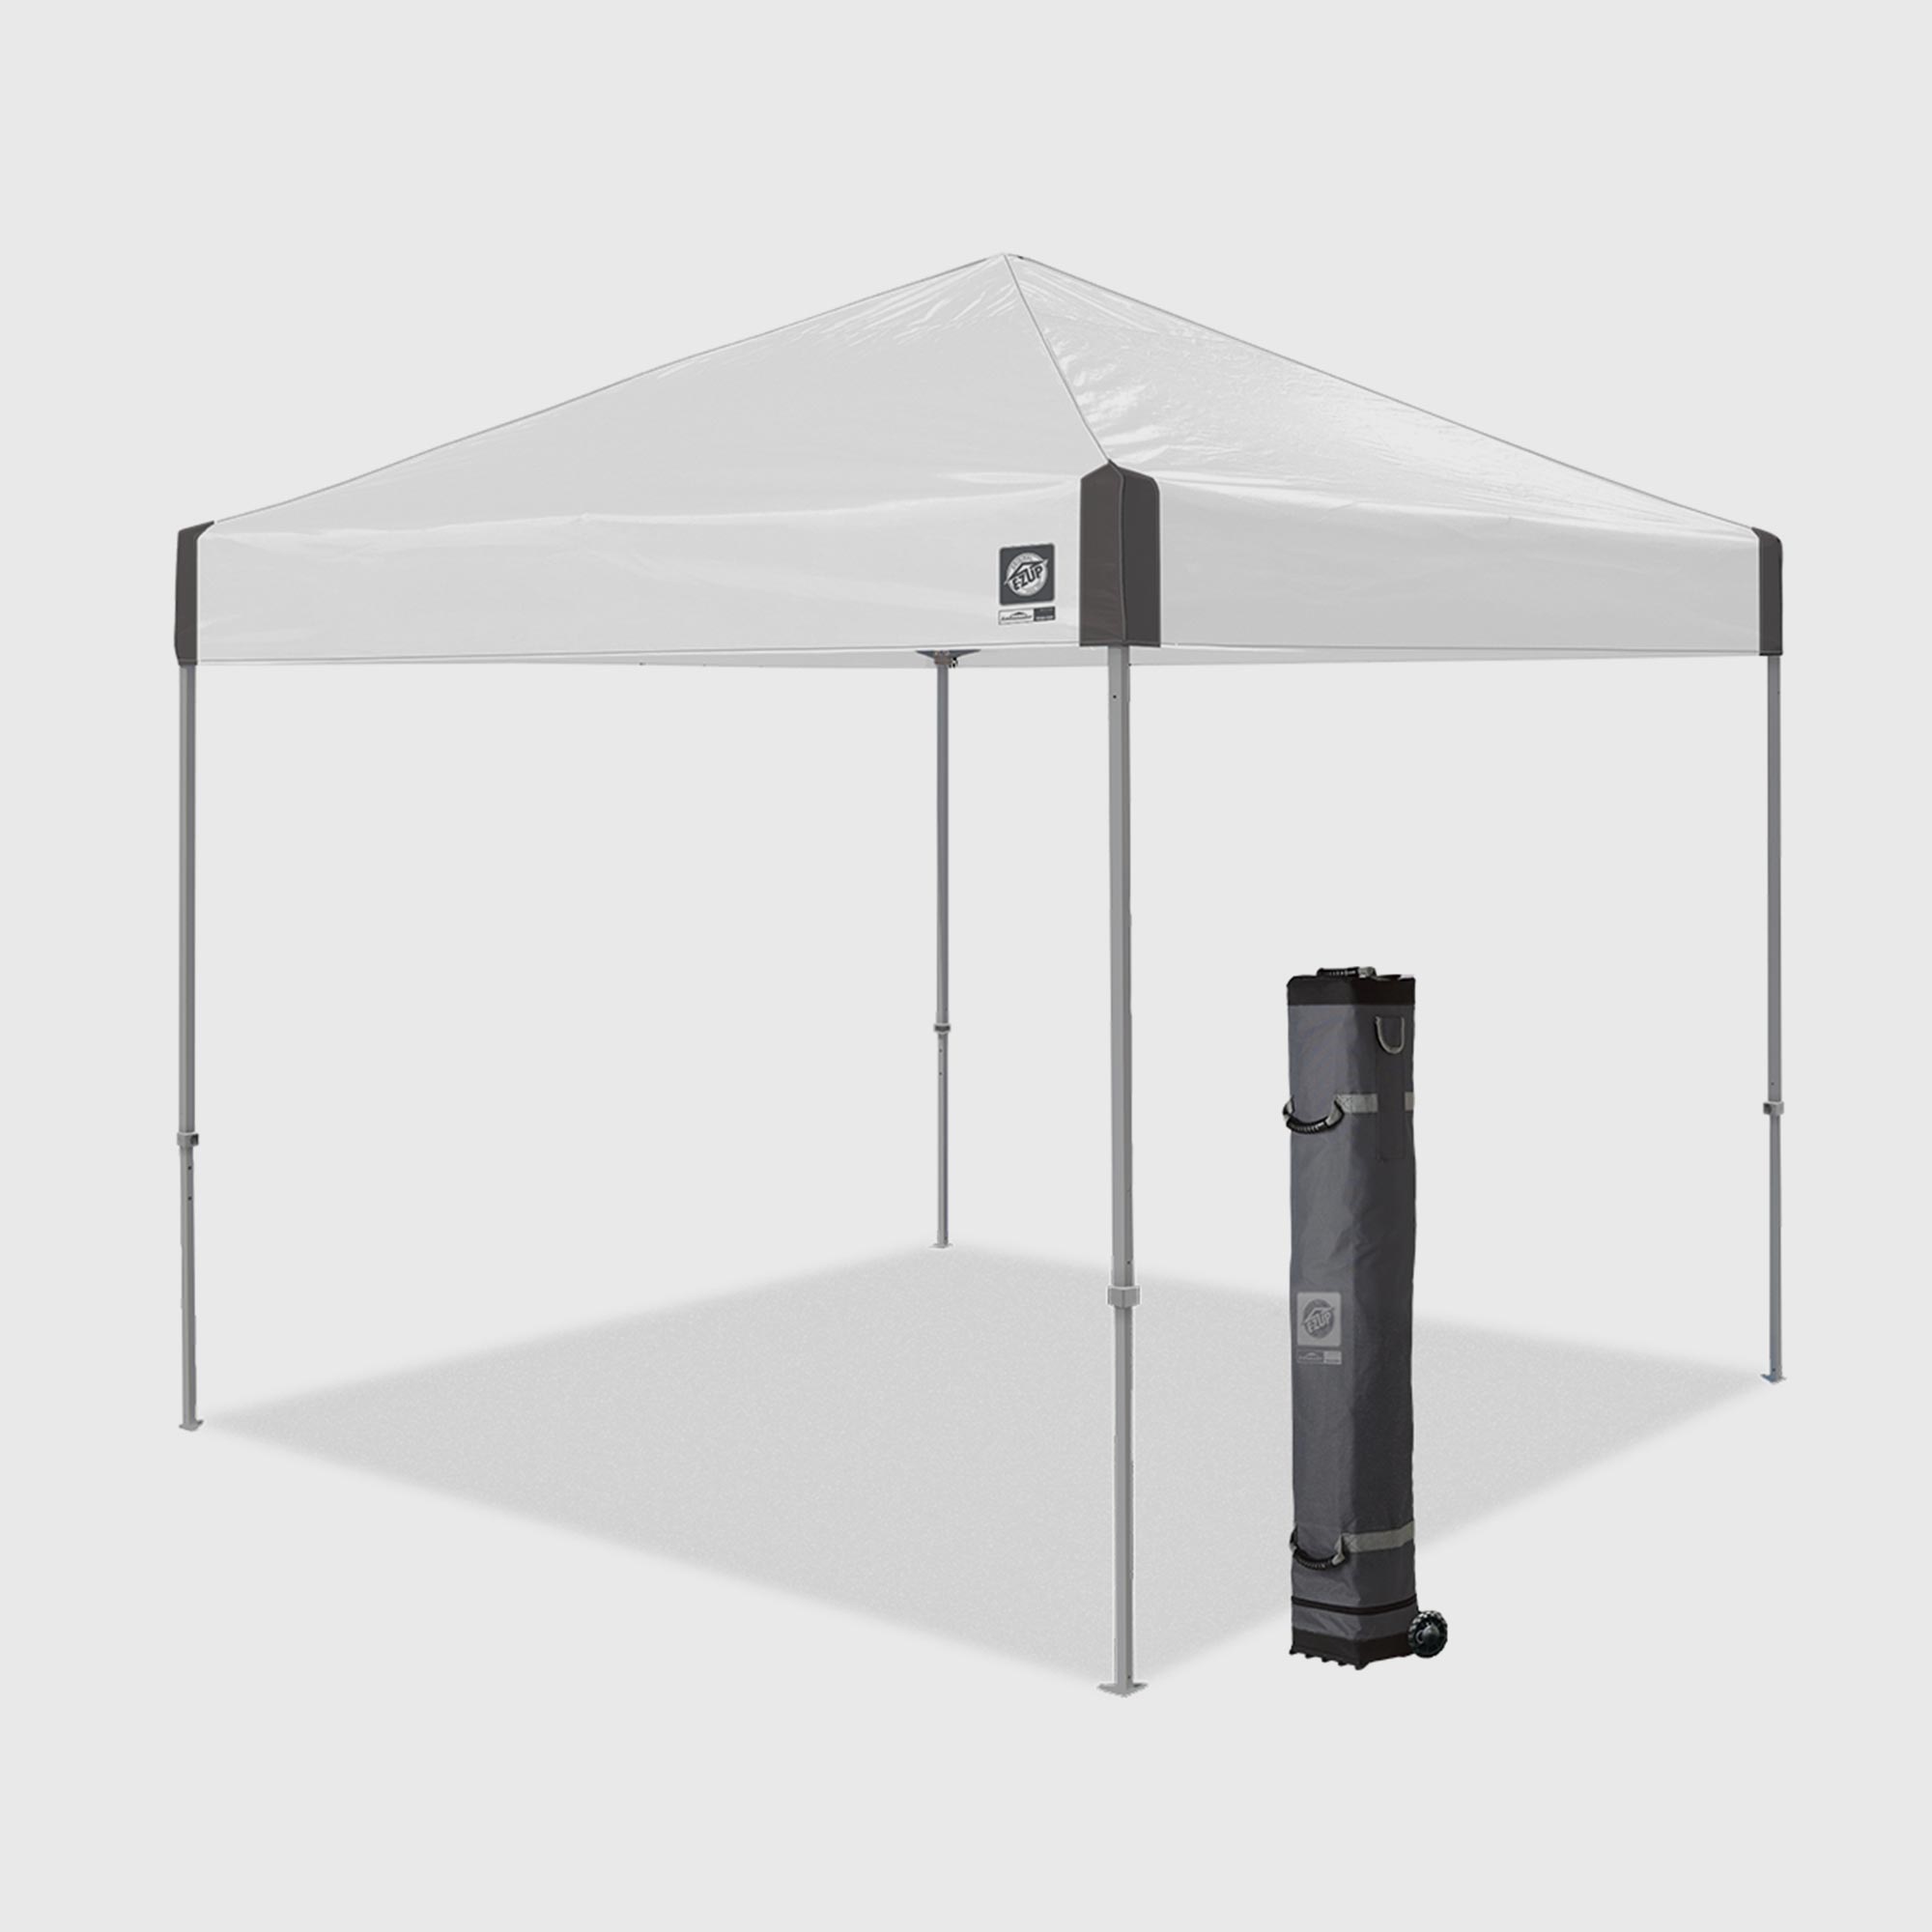 E-Z UP® Ambassador Instant Shelter®, 10' x 10', White Slate